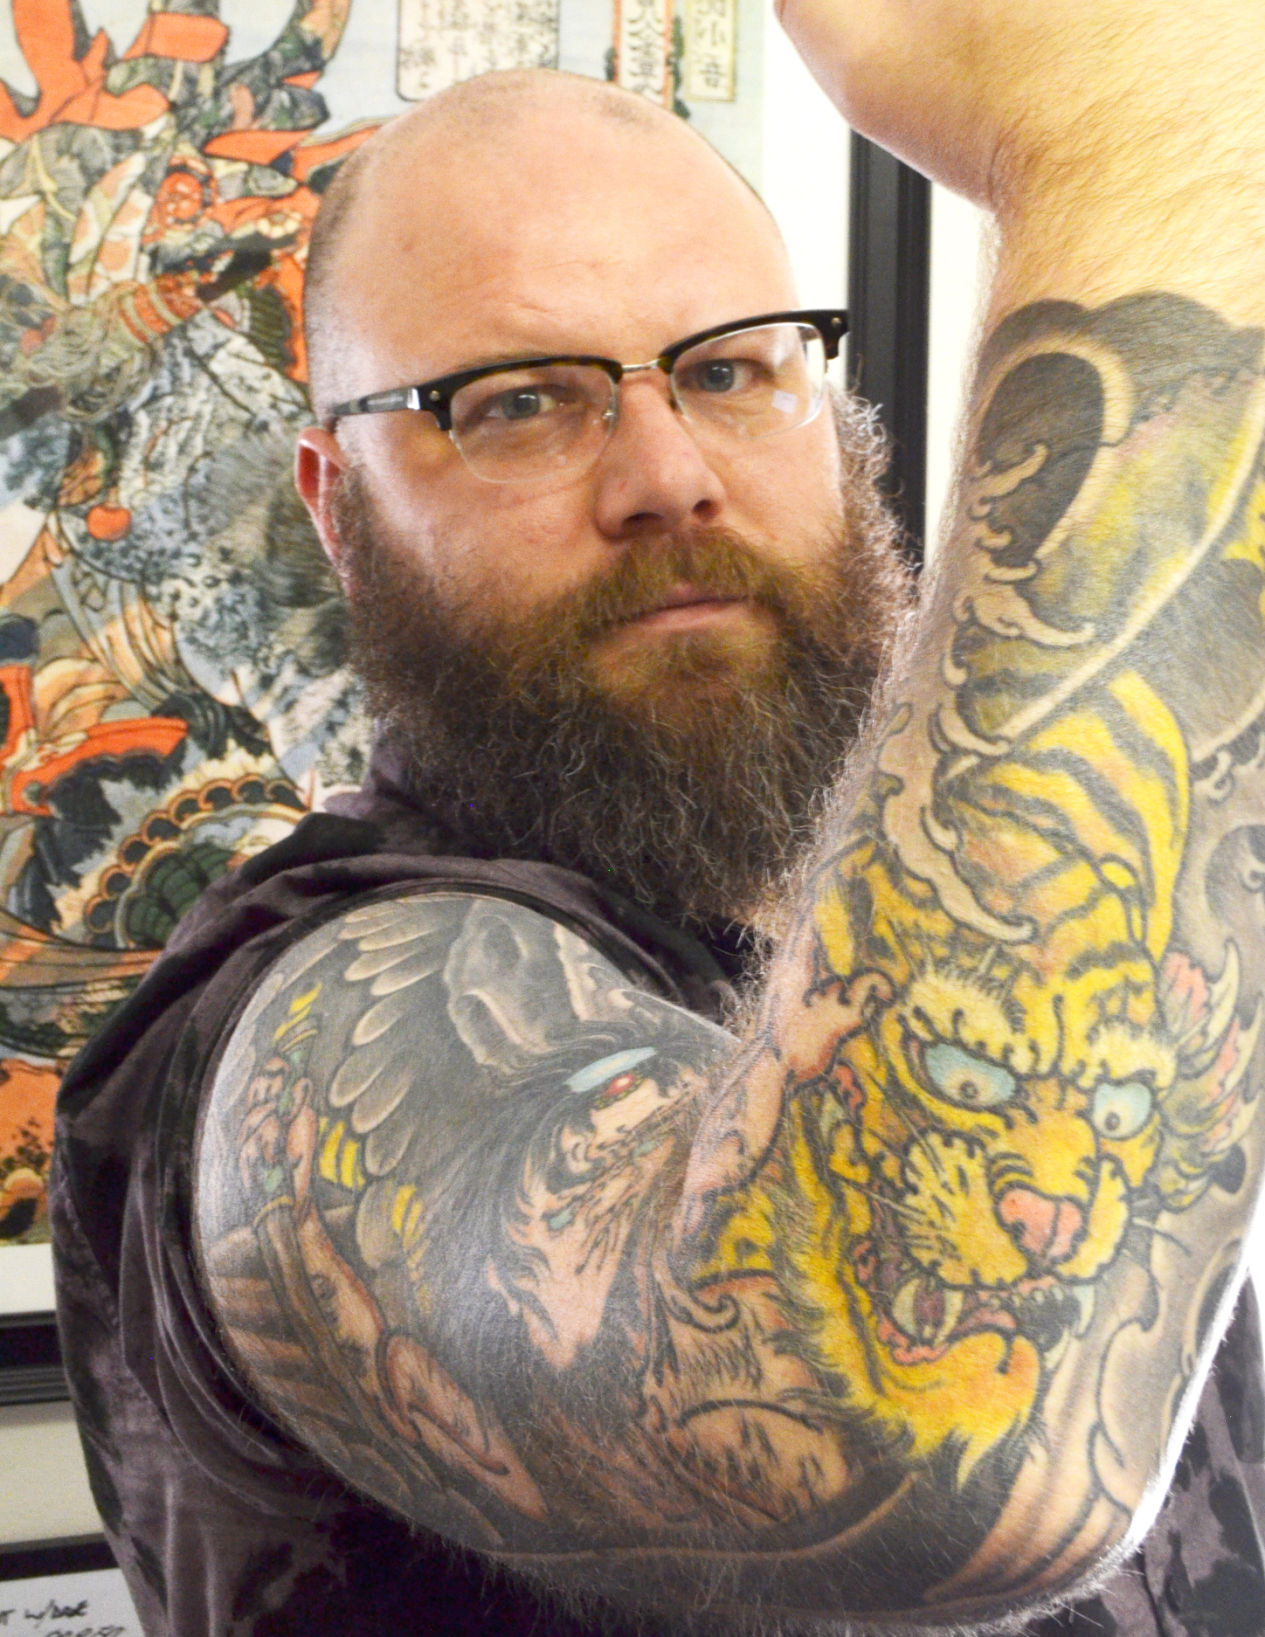 Tattoos disguising skin cancer | Daily Telegraph